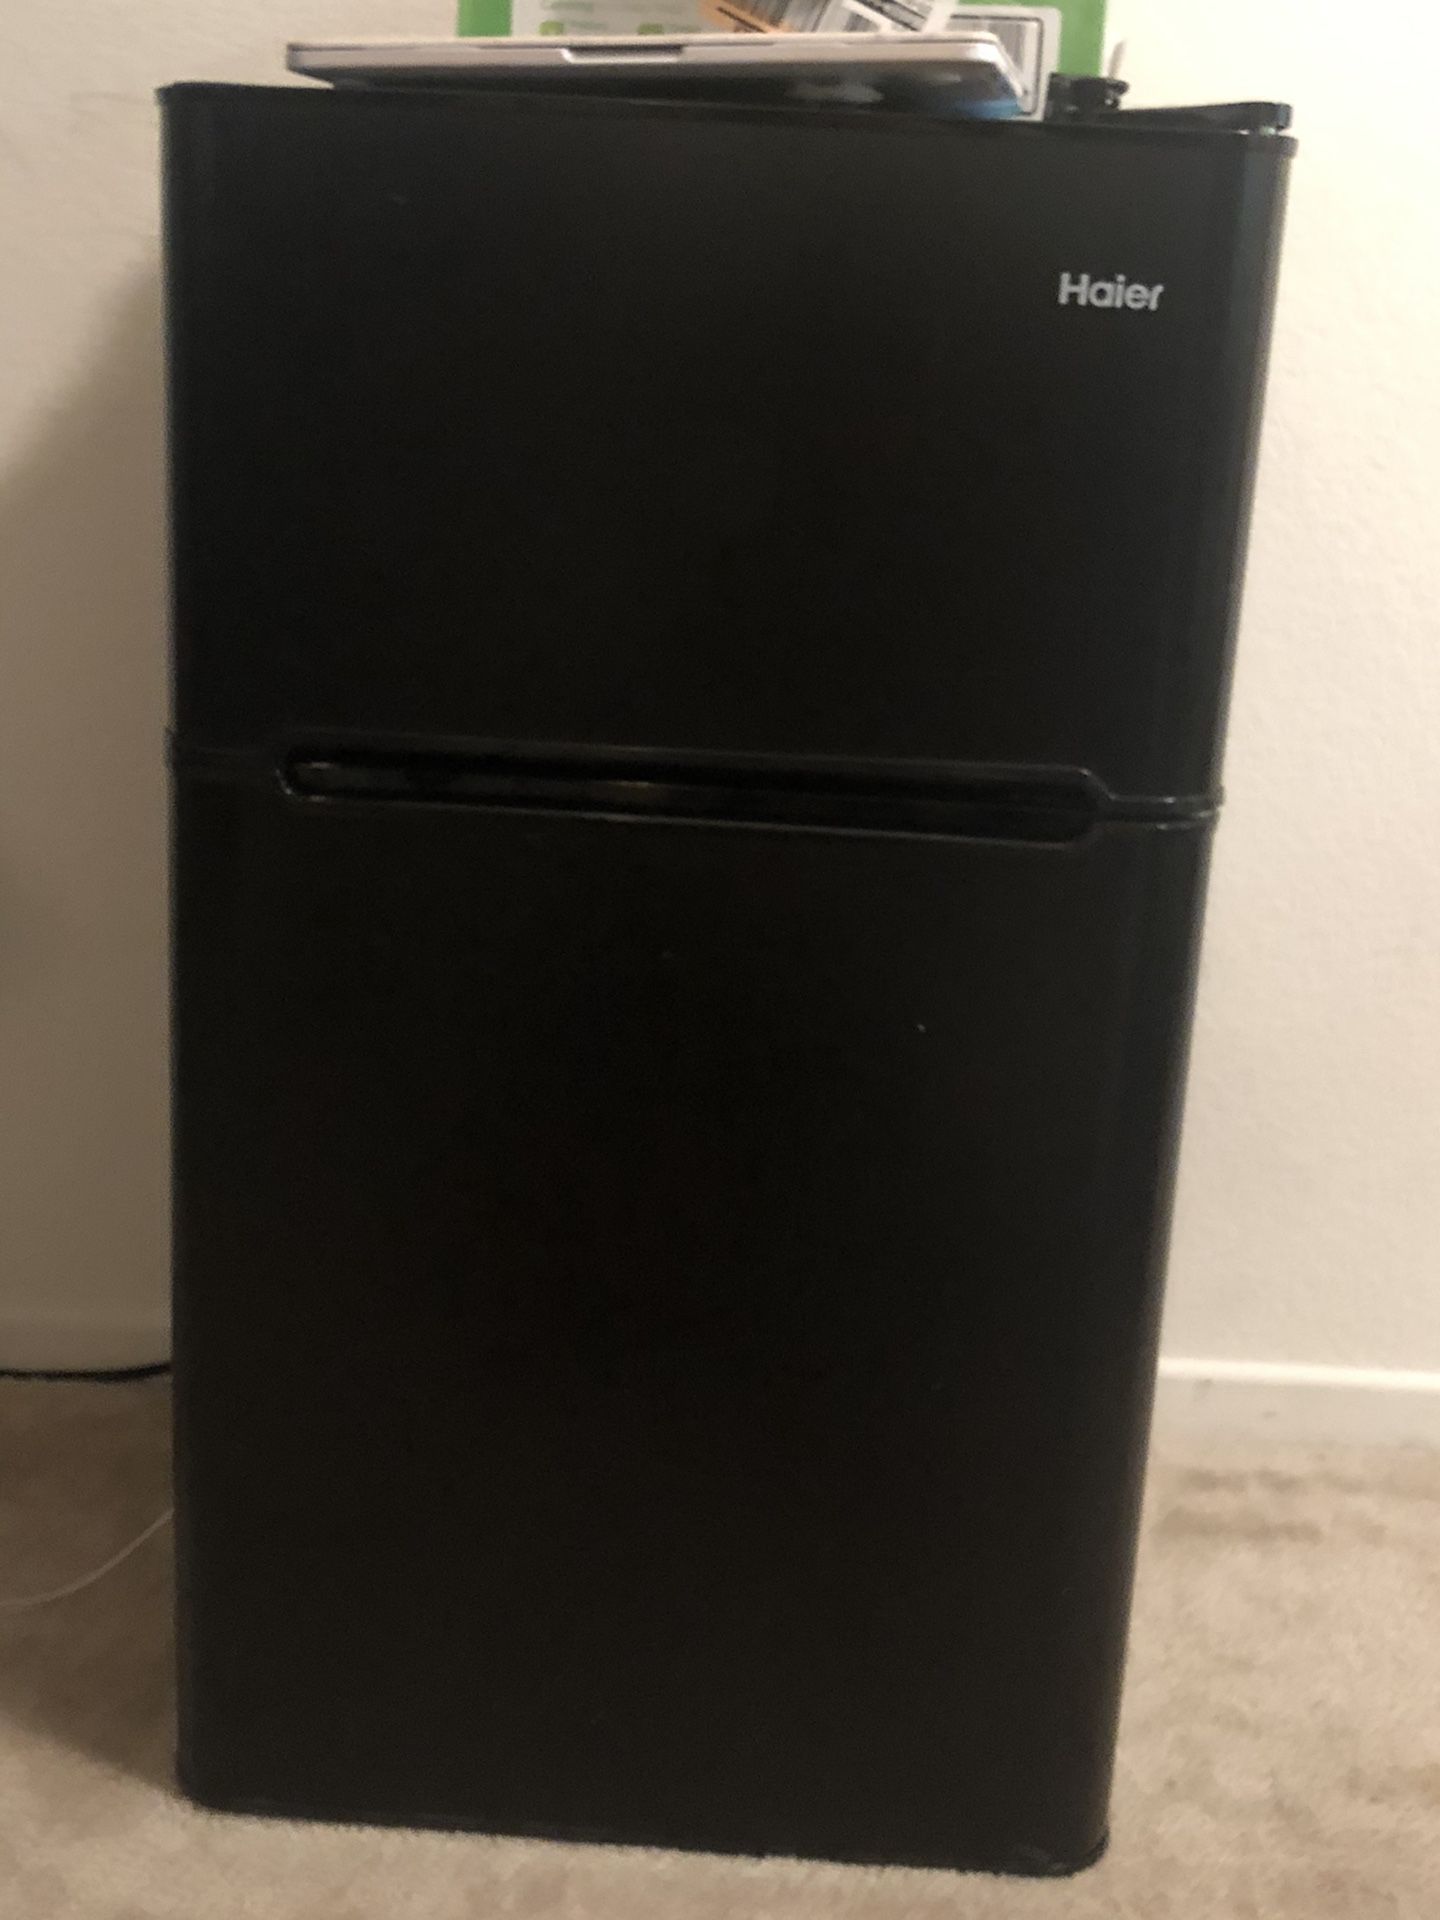 haier mini fridge with freezer component